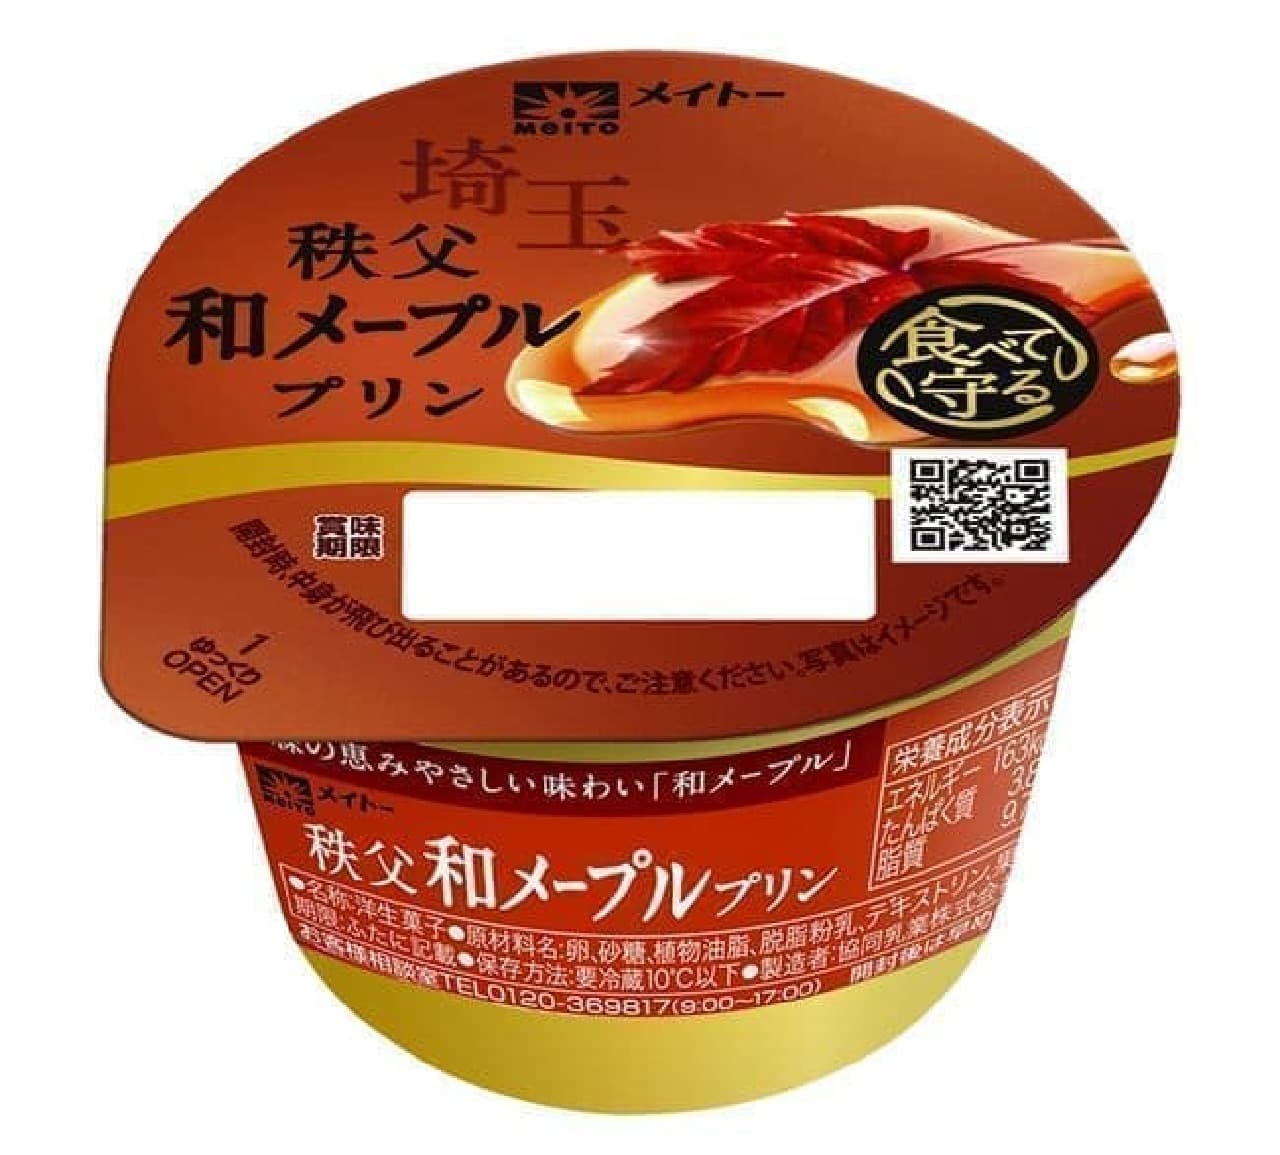 Chichibu Japanese Maple Pudding